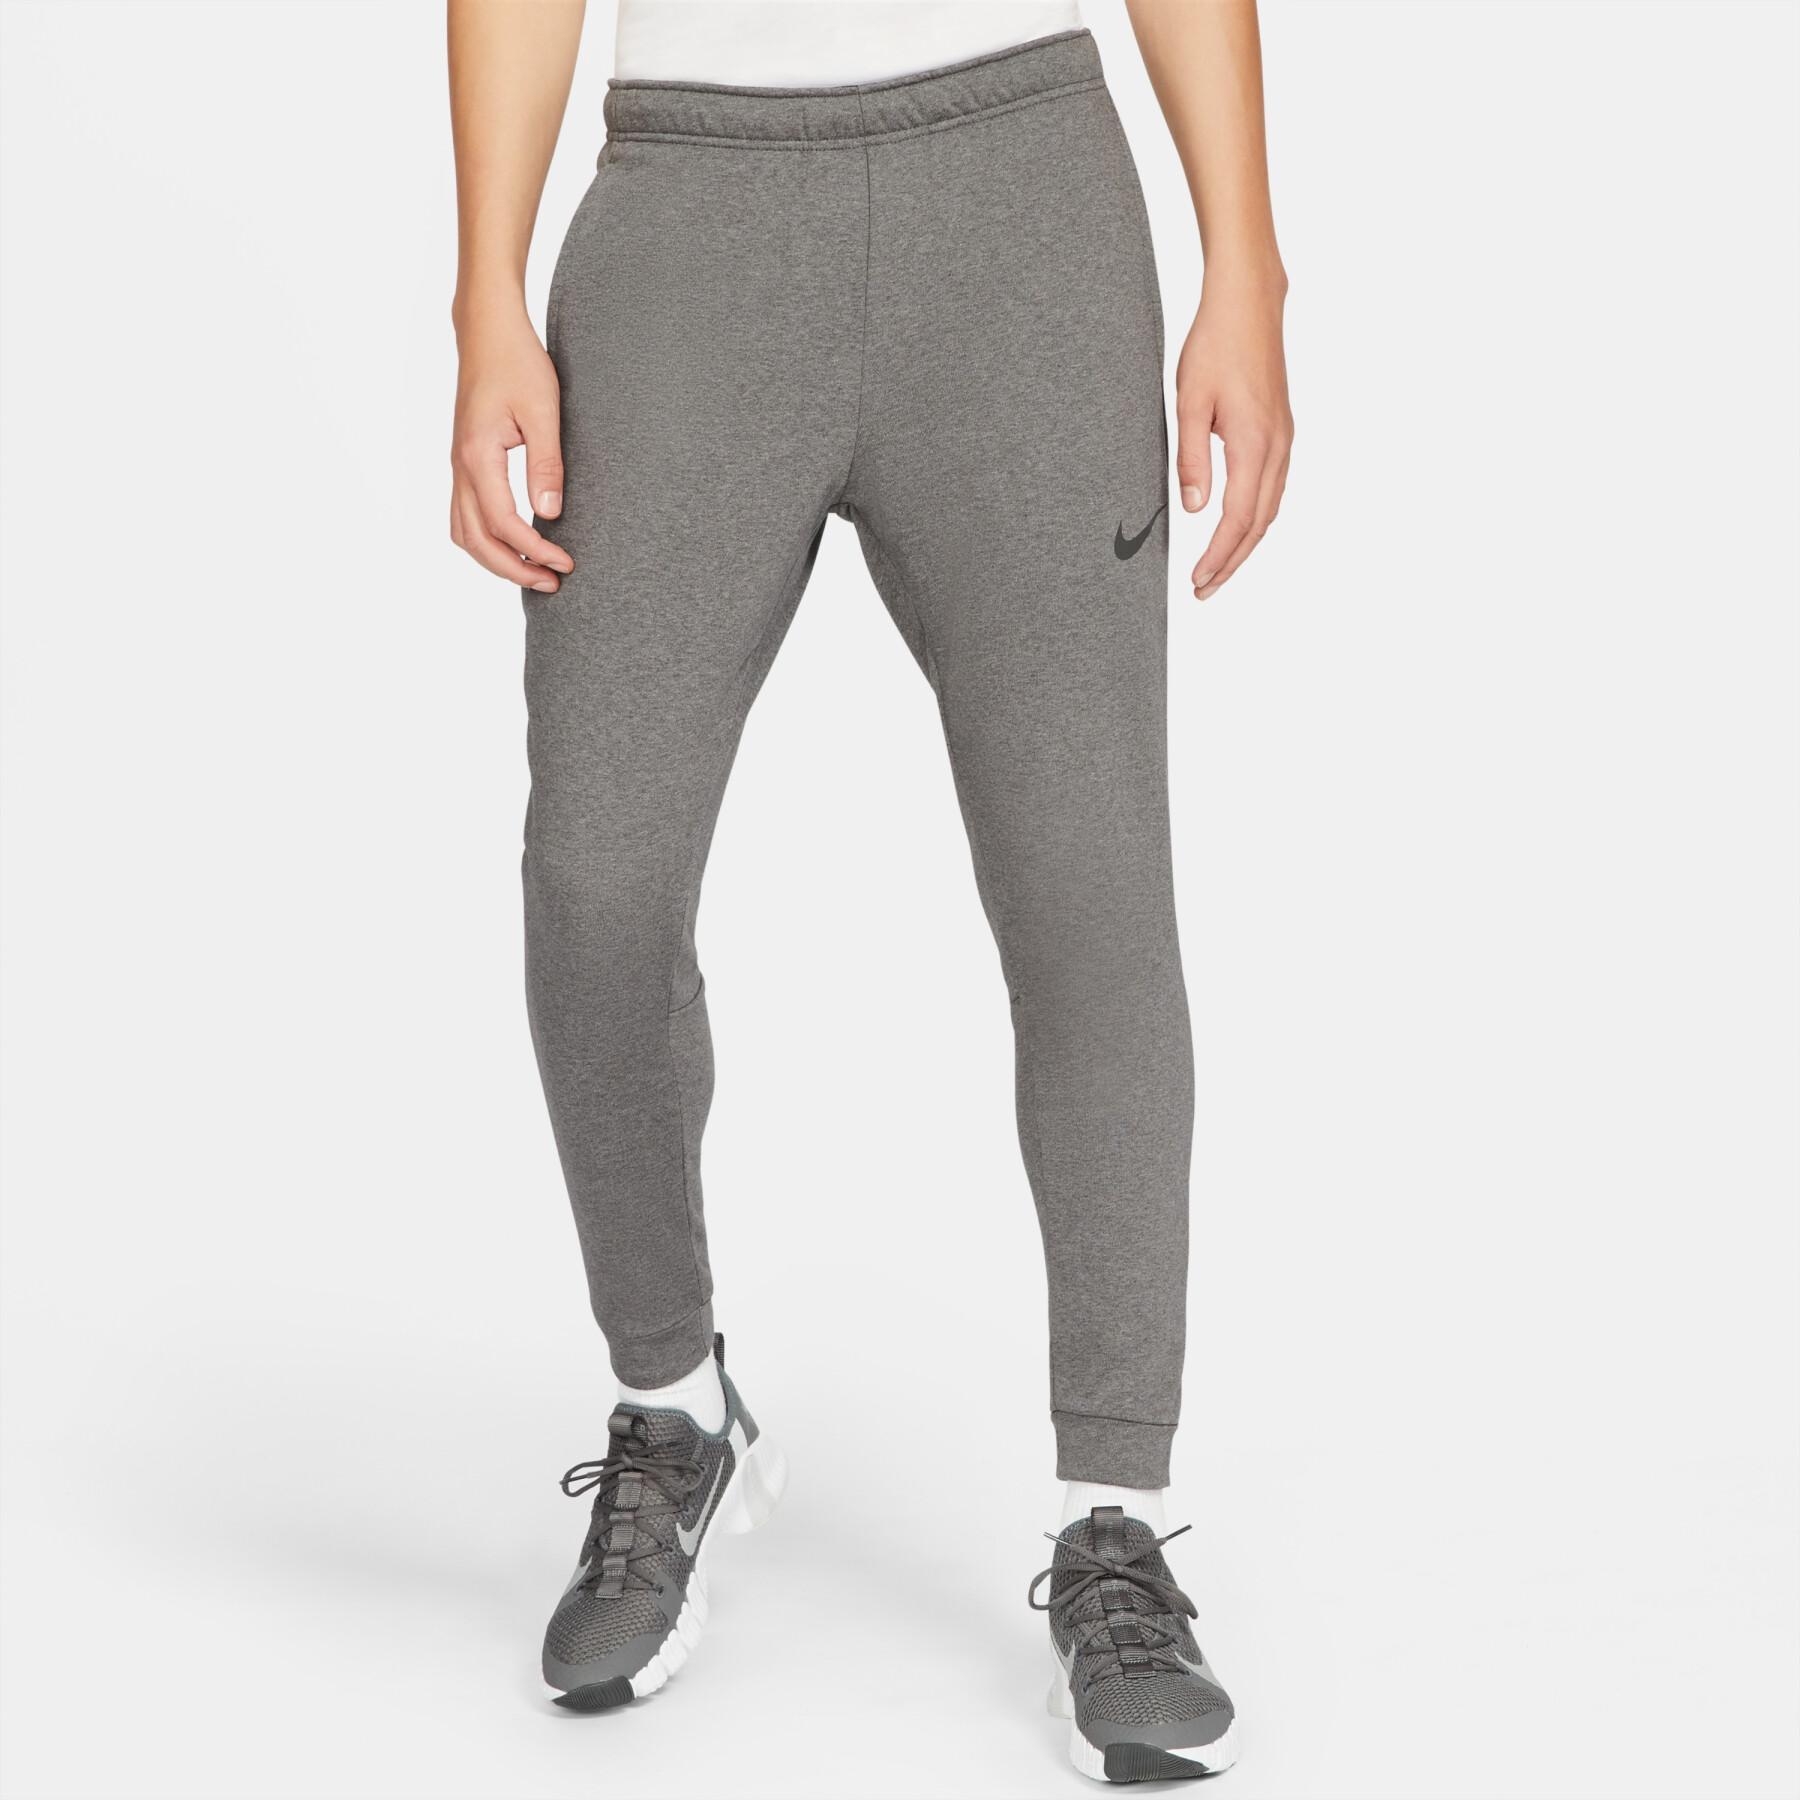 Pantalón de jogging Nike dri-fit